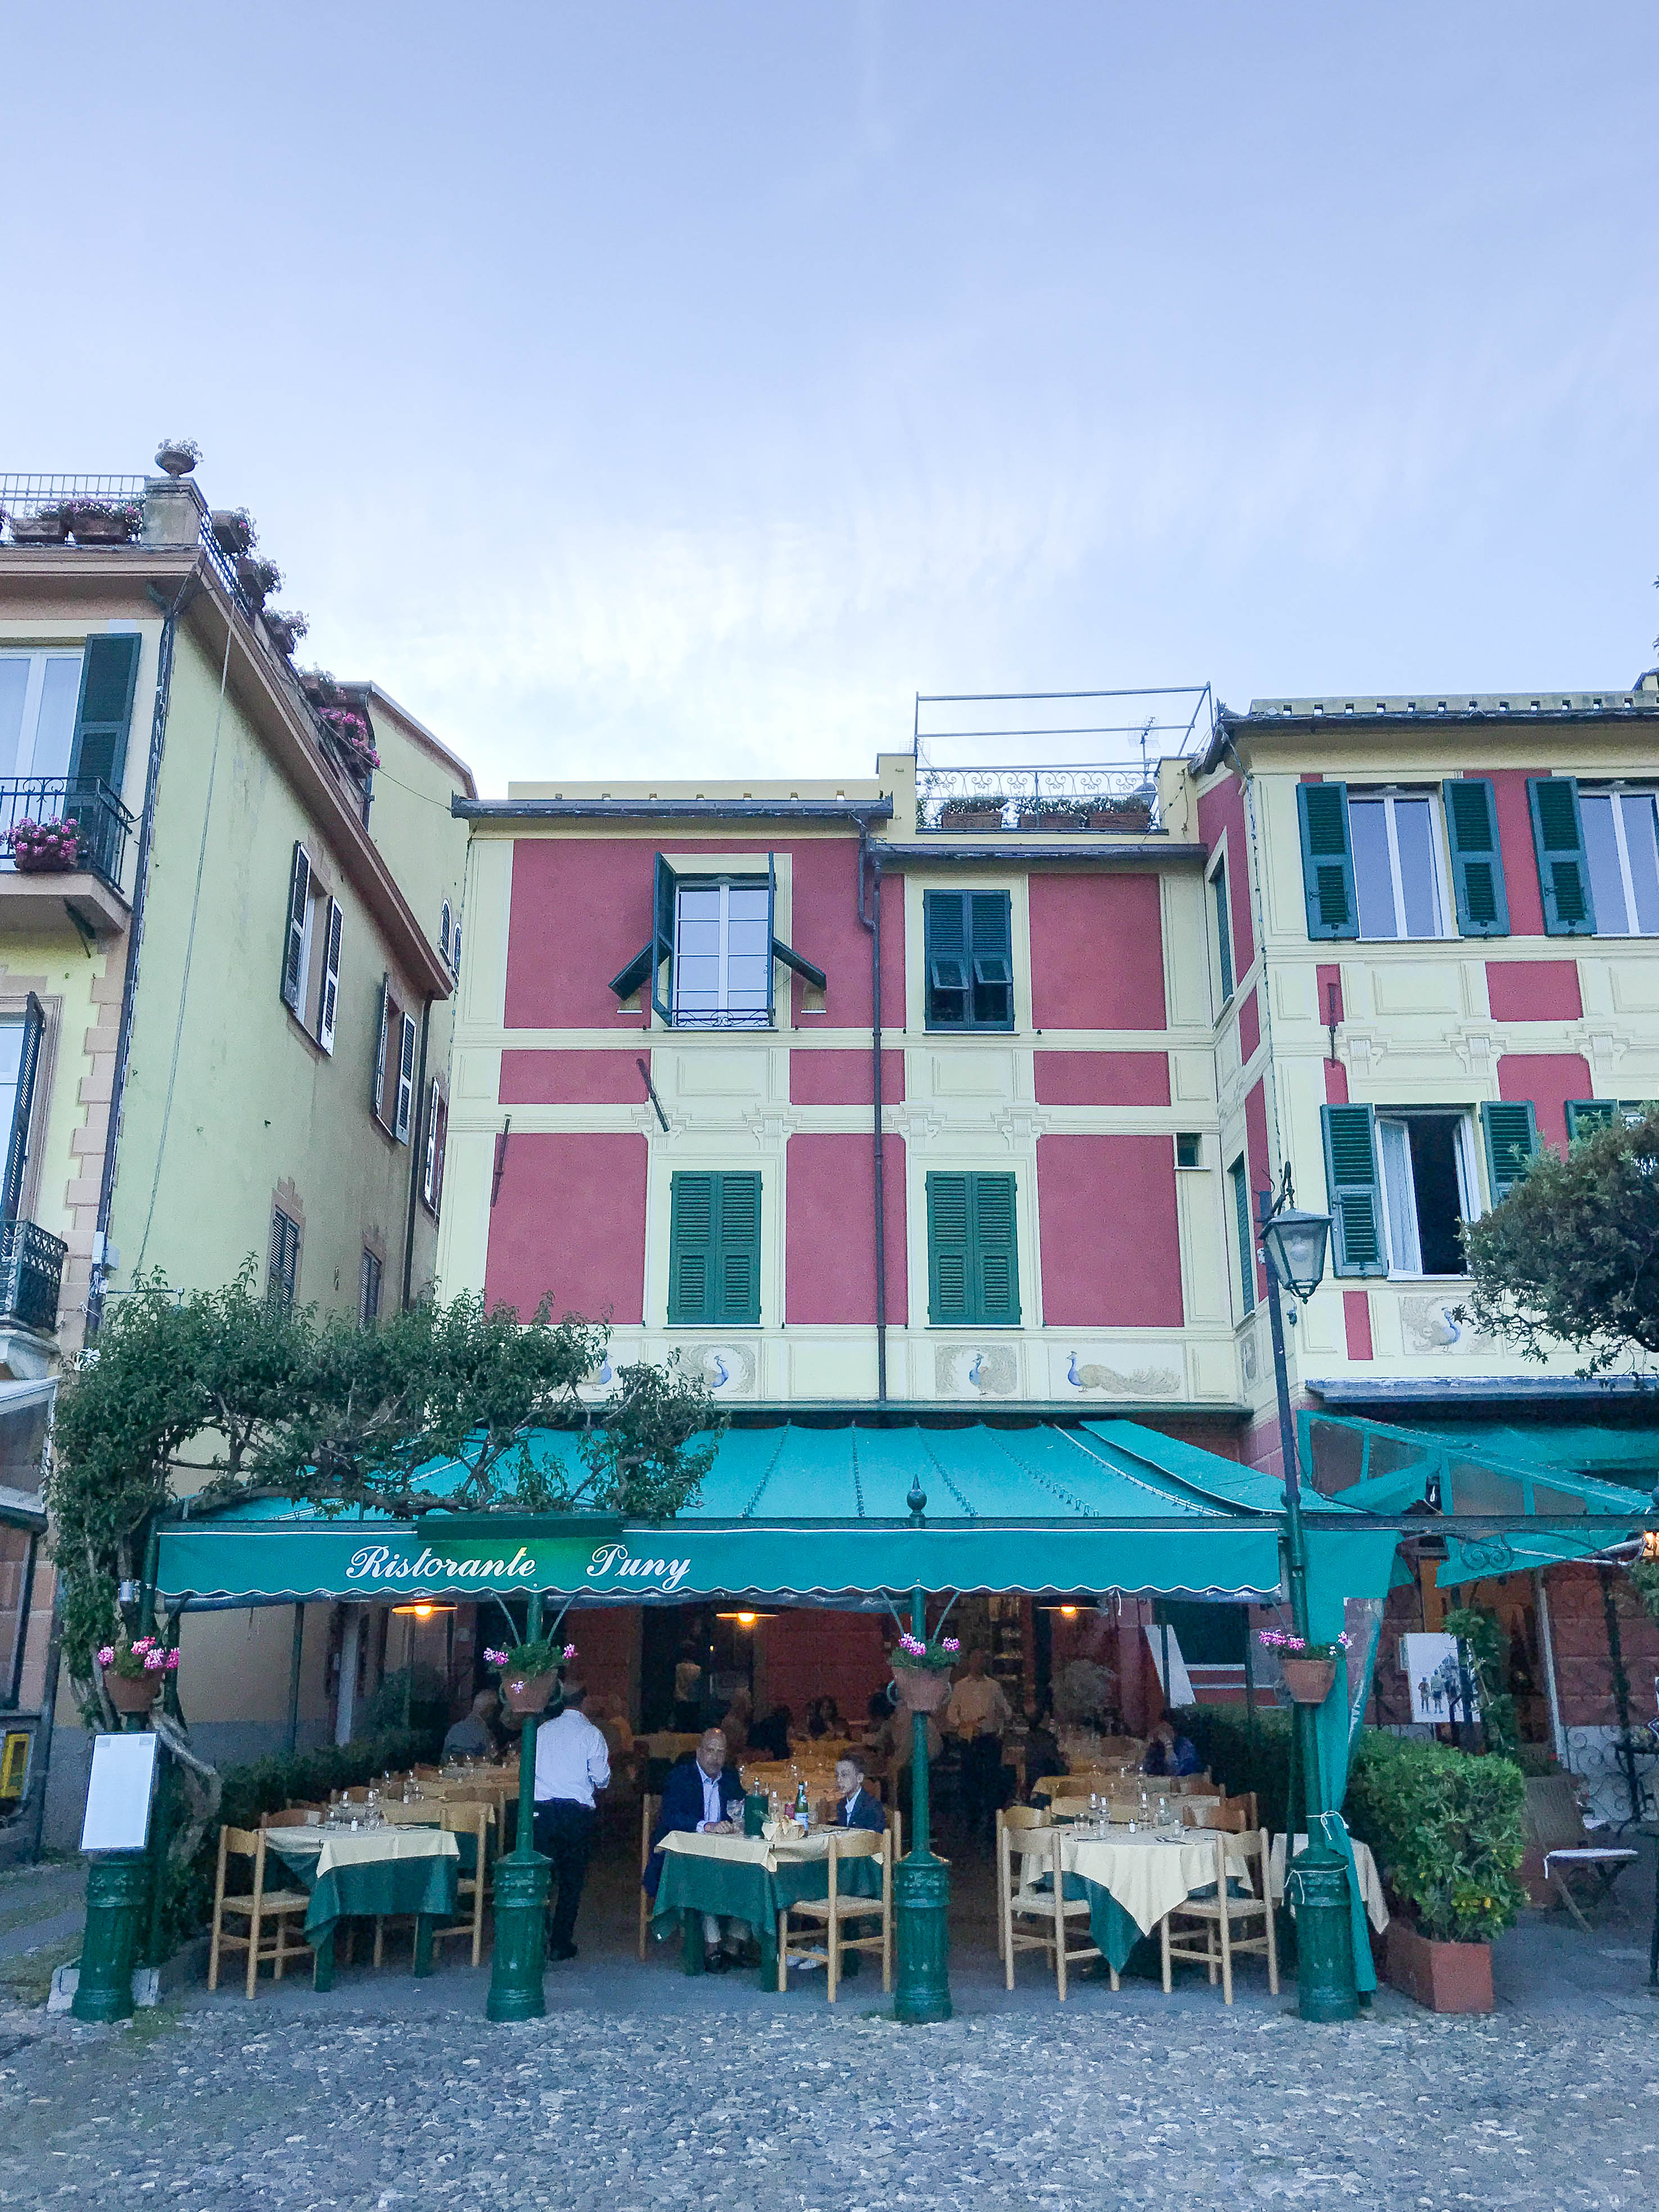 Best of Italy: Portofino's Iconic Restaurant Puny Serves One Mean Pasta Dish